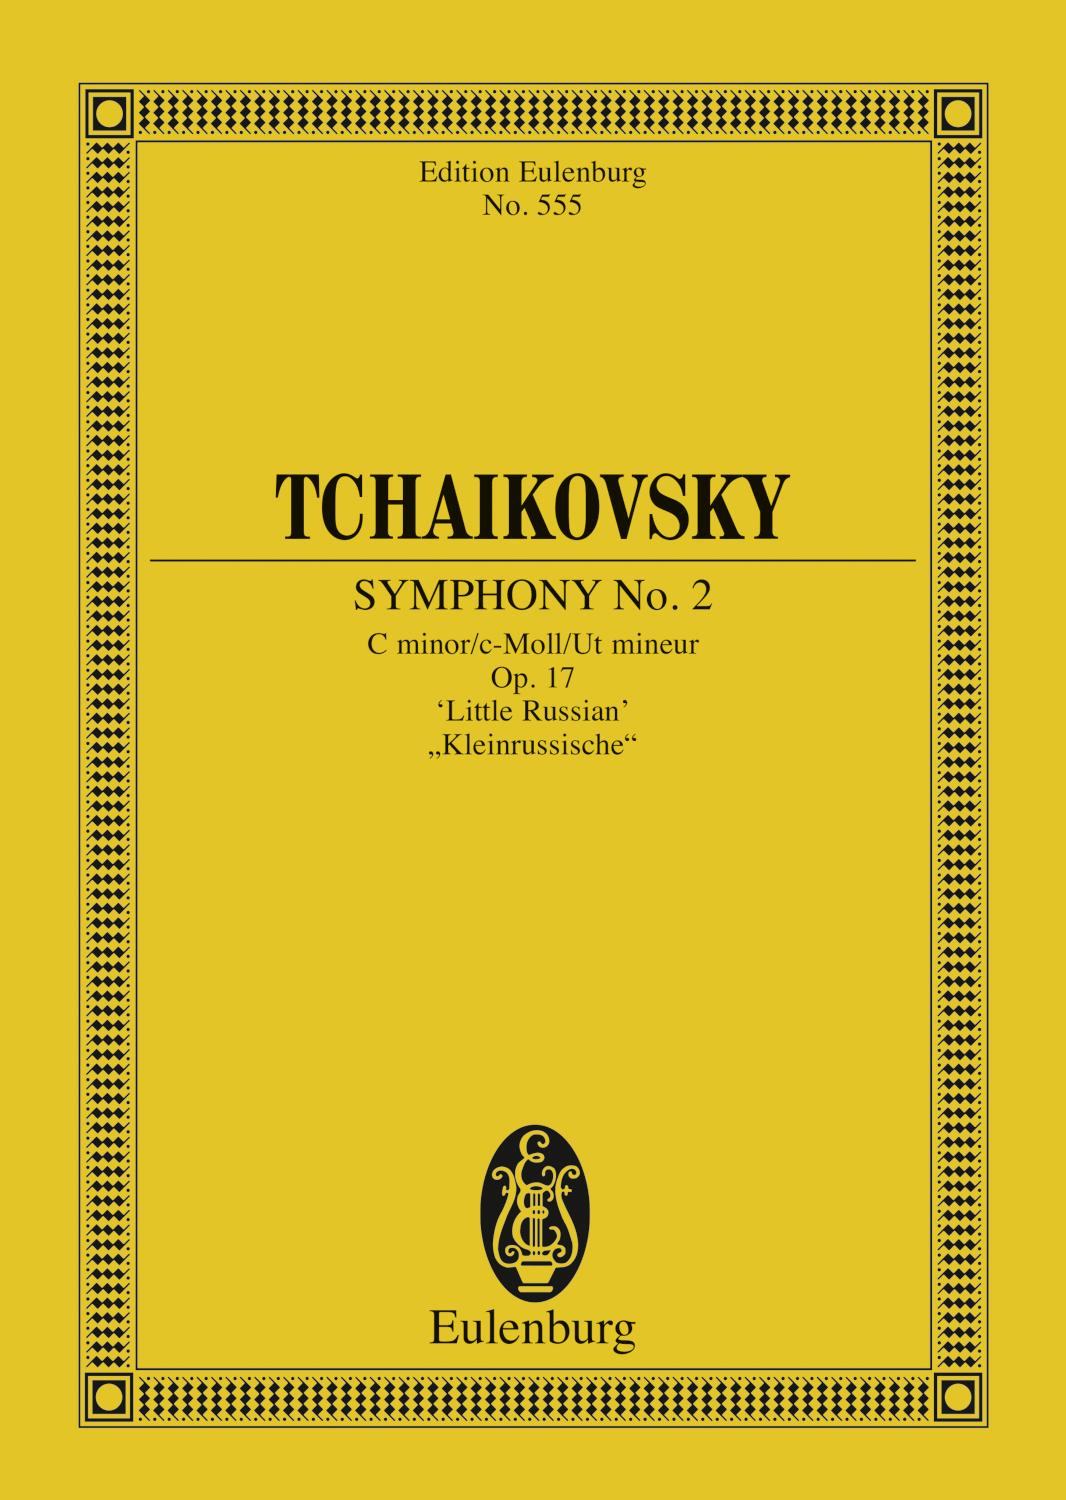 Symphony No. 2 C minor Op. 17, 'Little Russian'